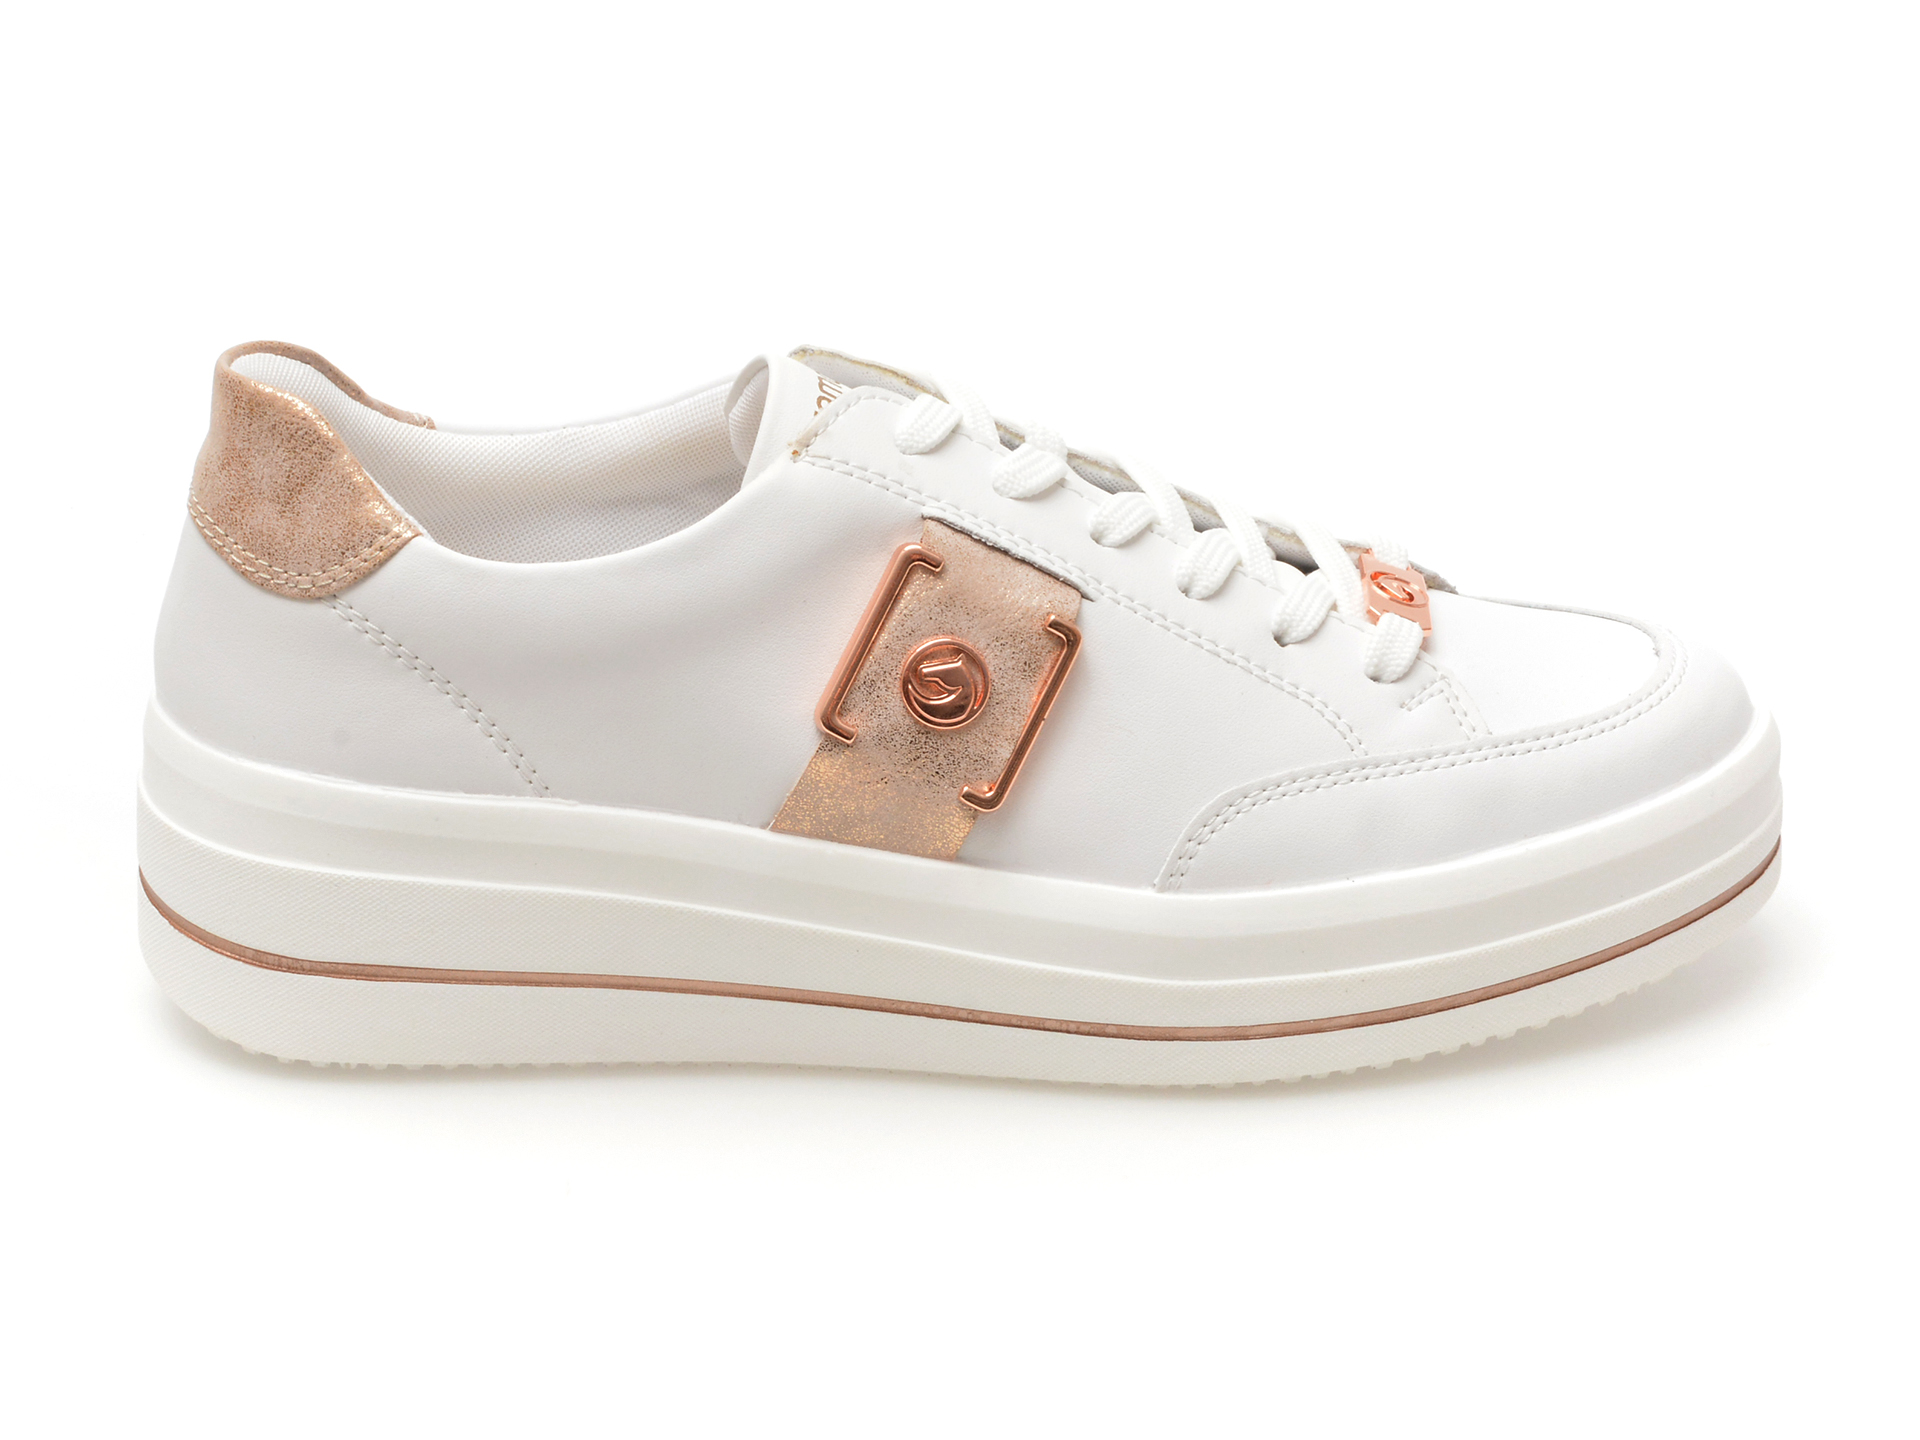 Pantofi Casual REMONTE albi, D1C02, din piele naturala image13